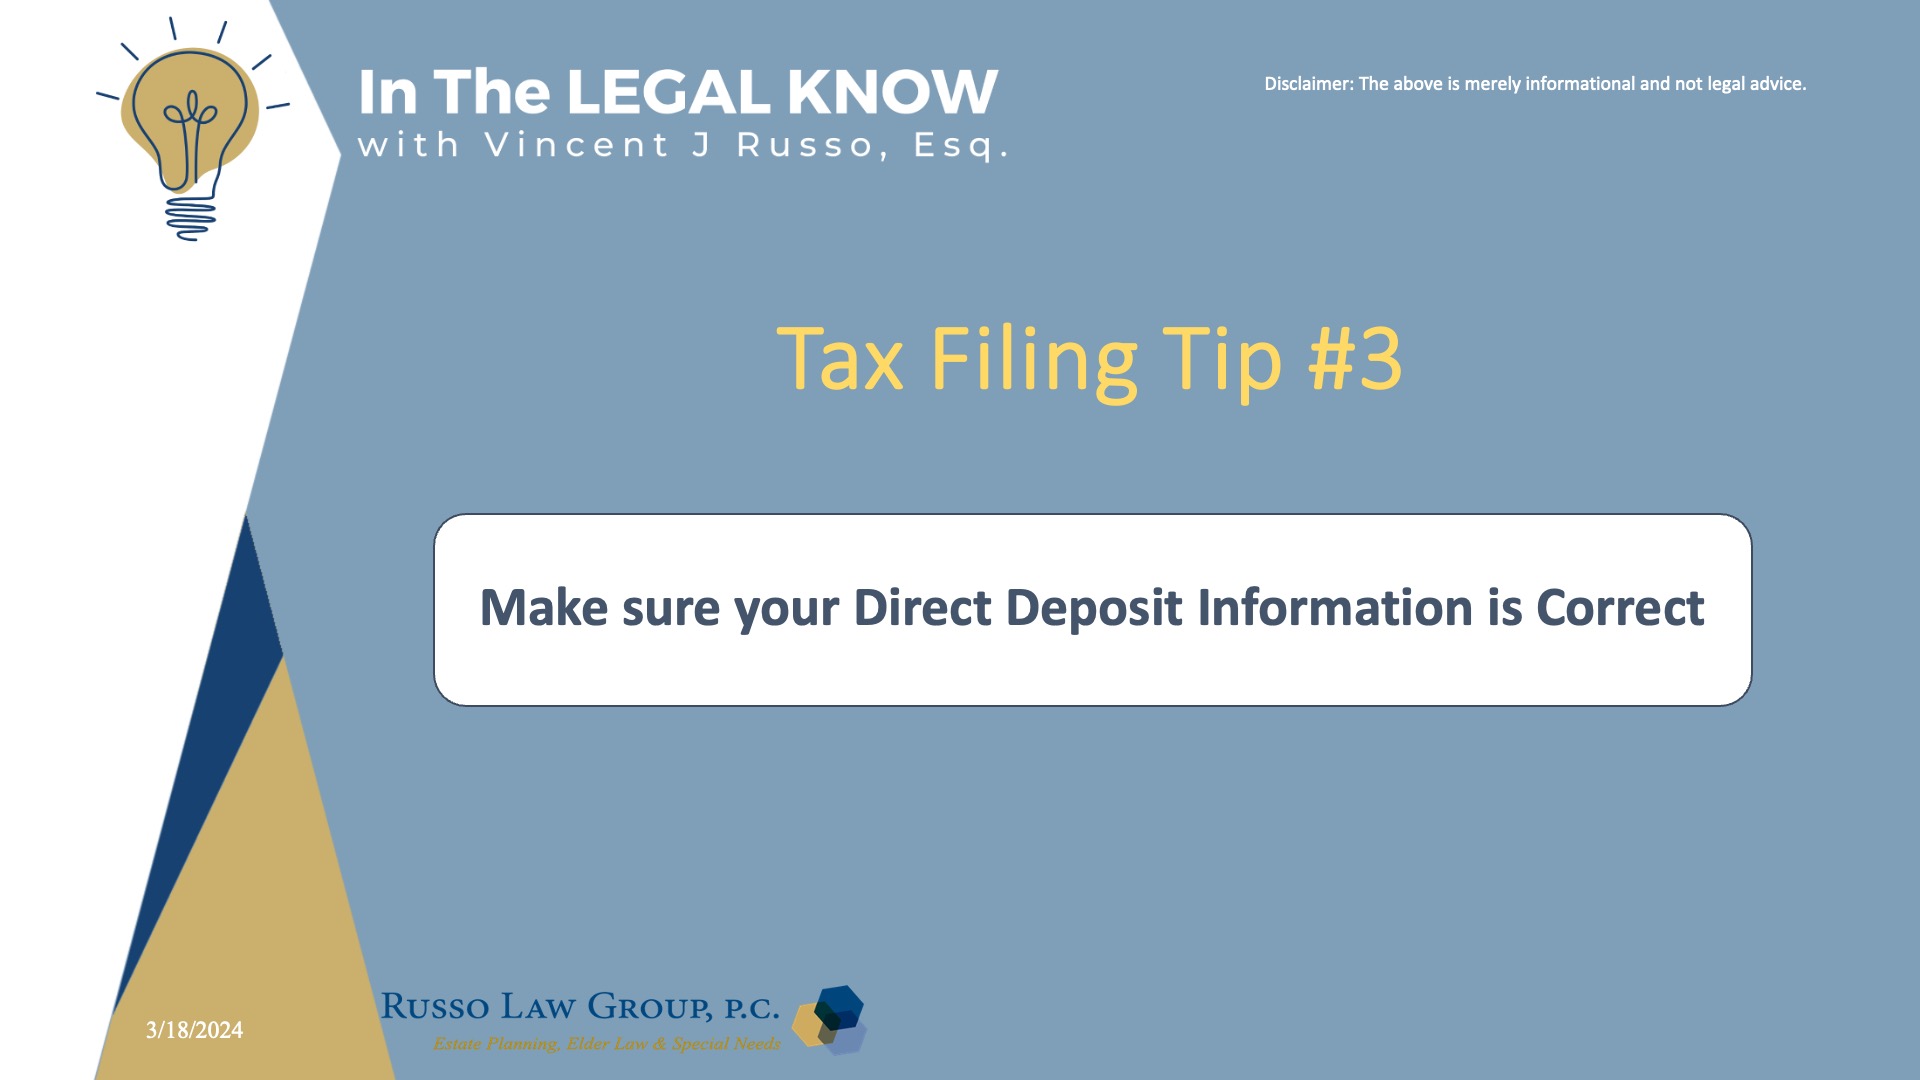 Tax Filing Tip #3